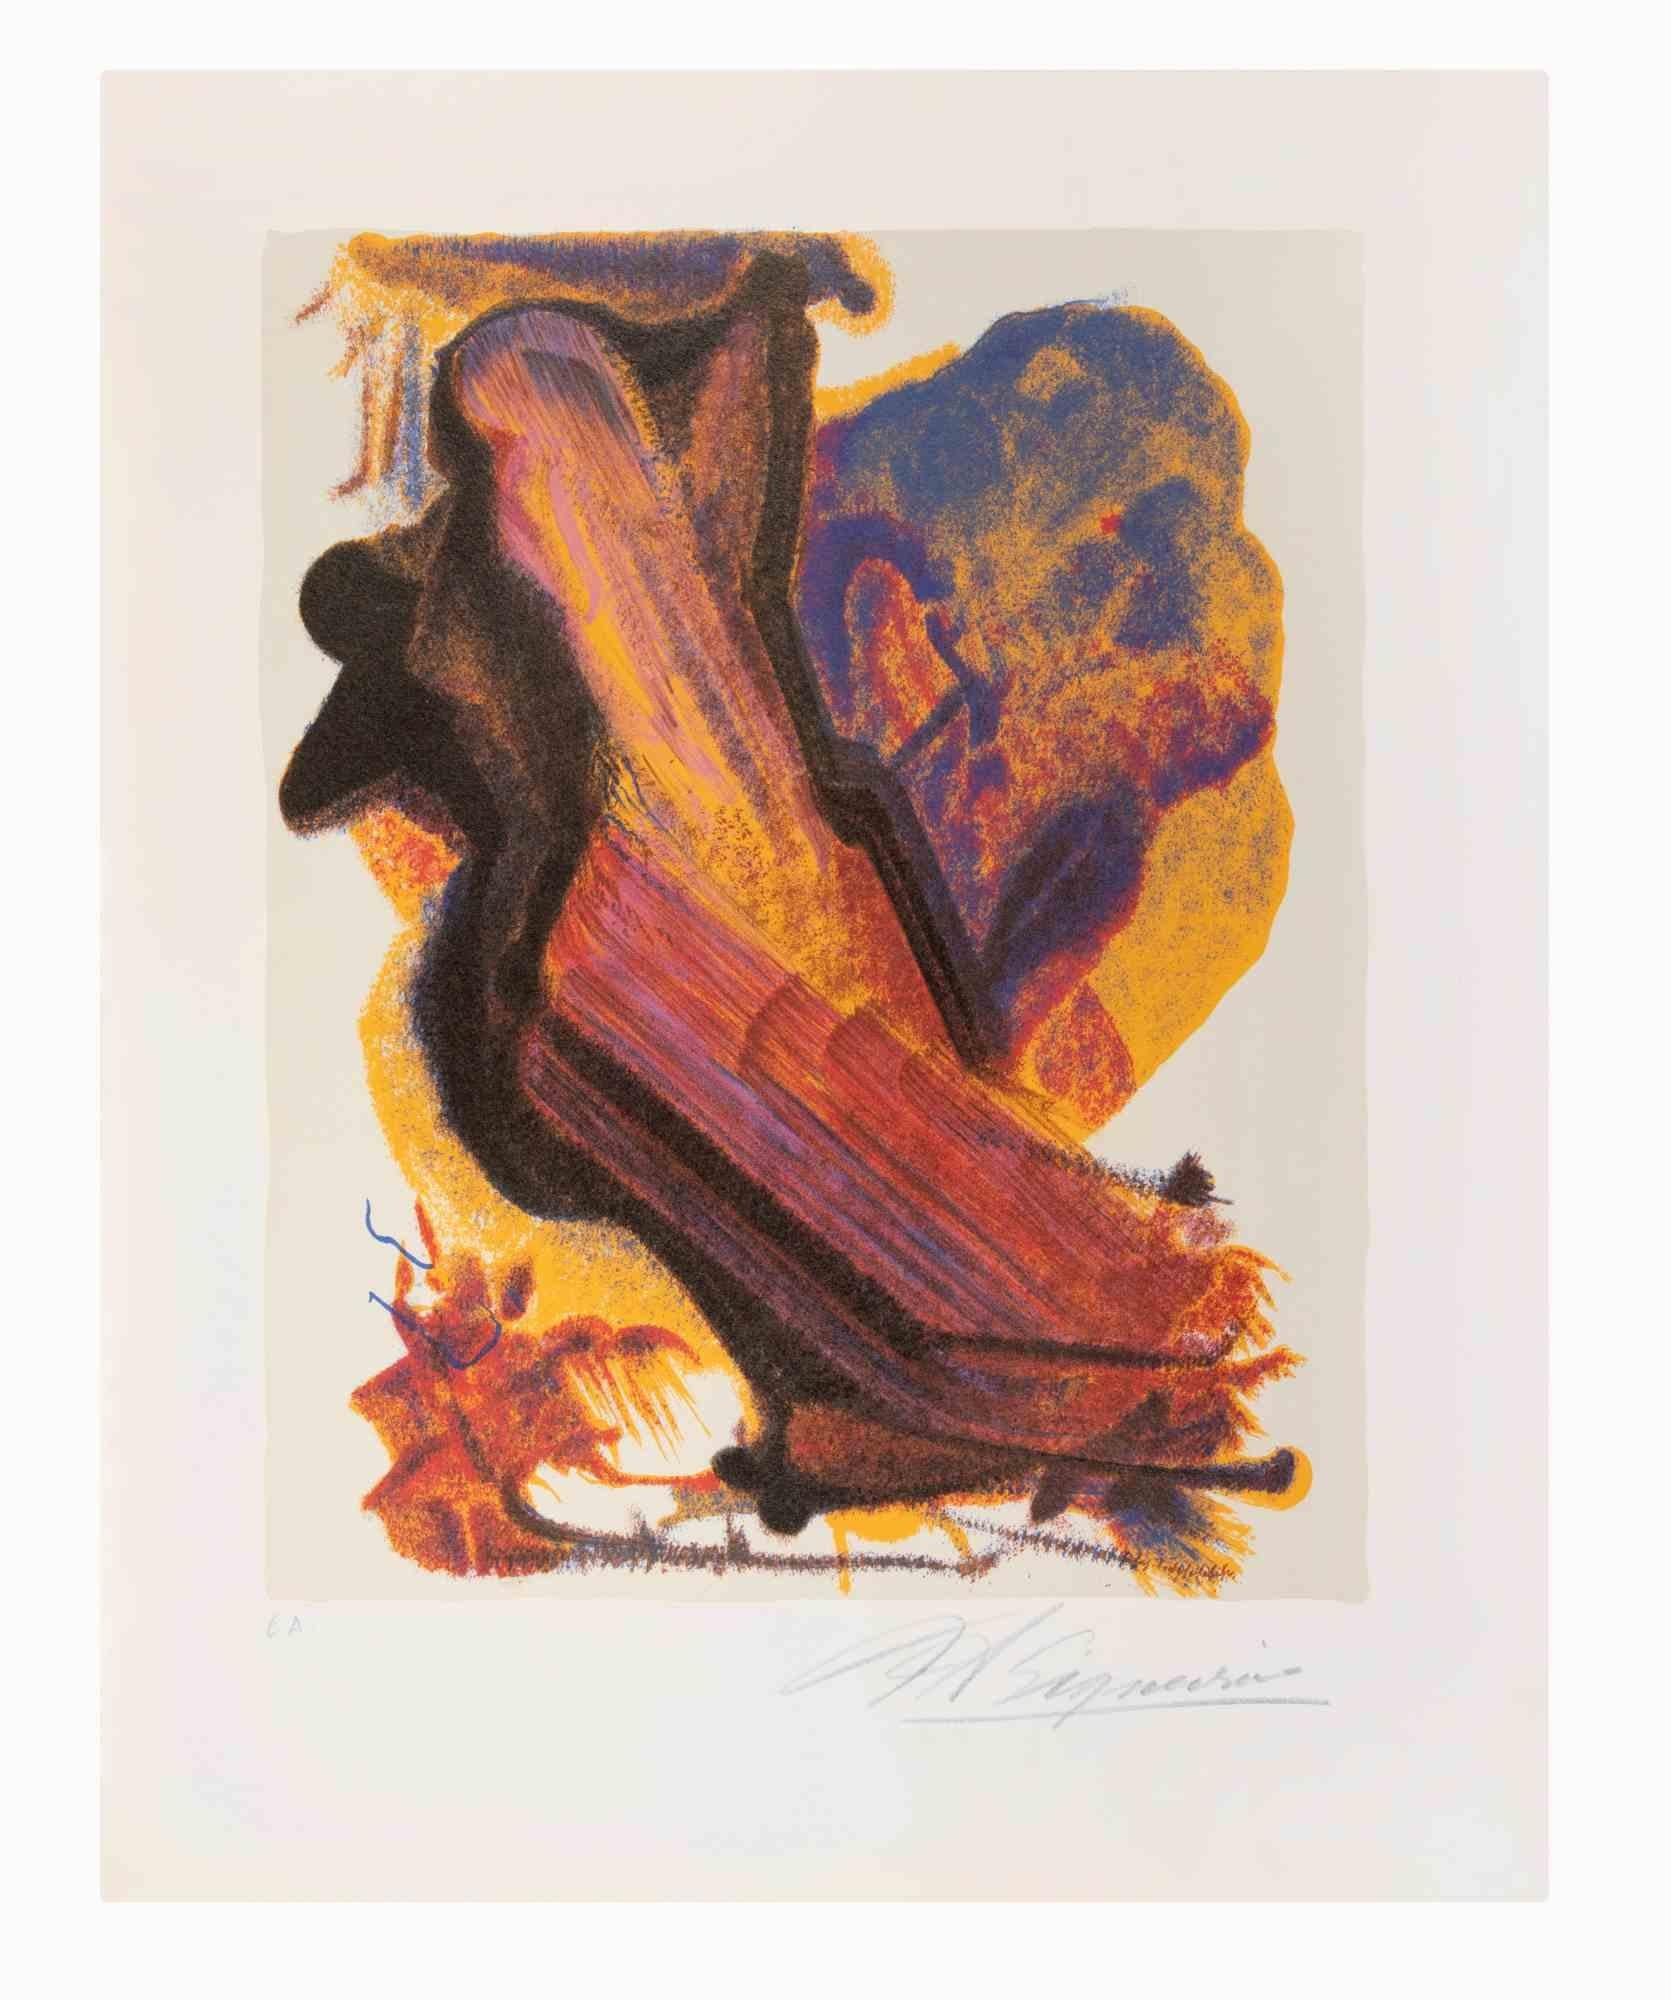 David Alfaro Siqueiros Abstract Print - Homage a Gerald Kramer Femme qui Marche - Lithograph by David A.Siqueiros - 1971